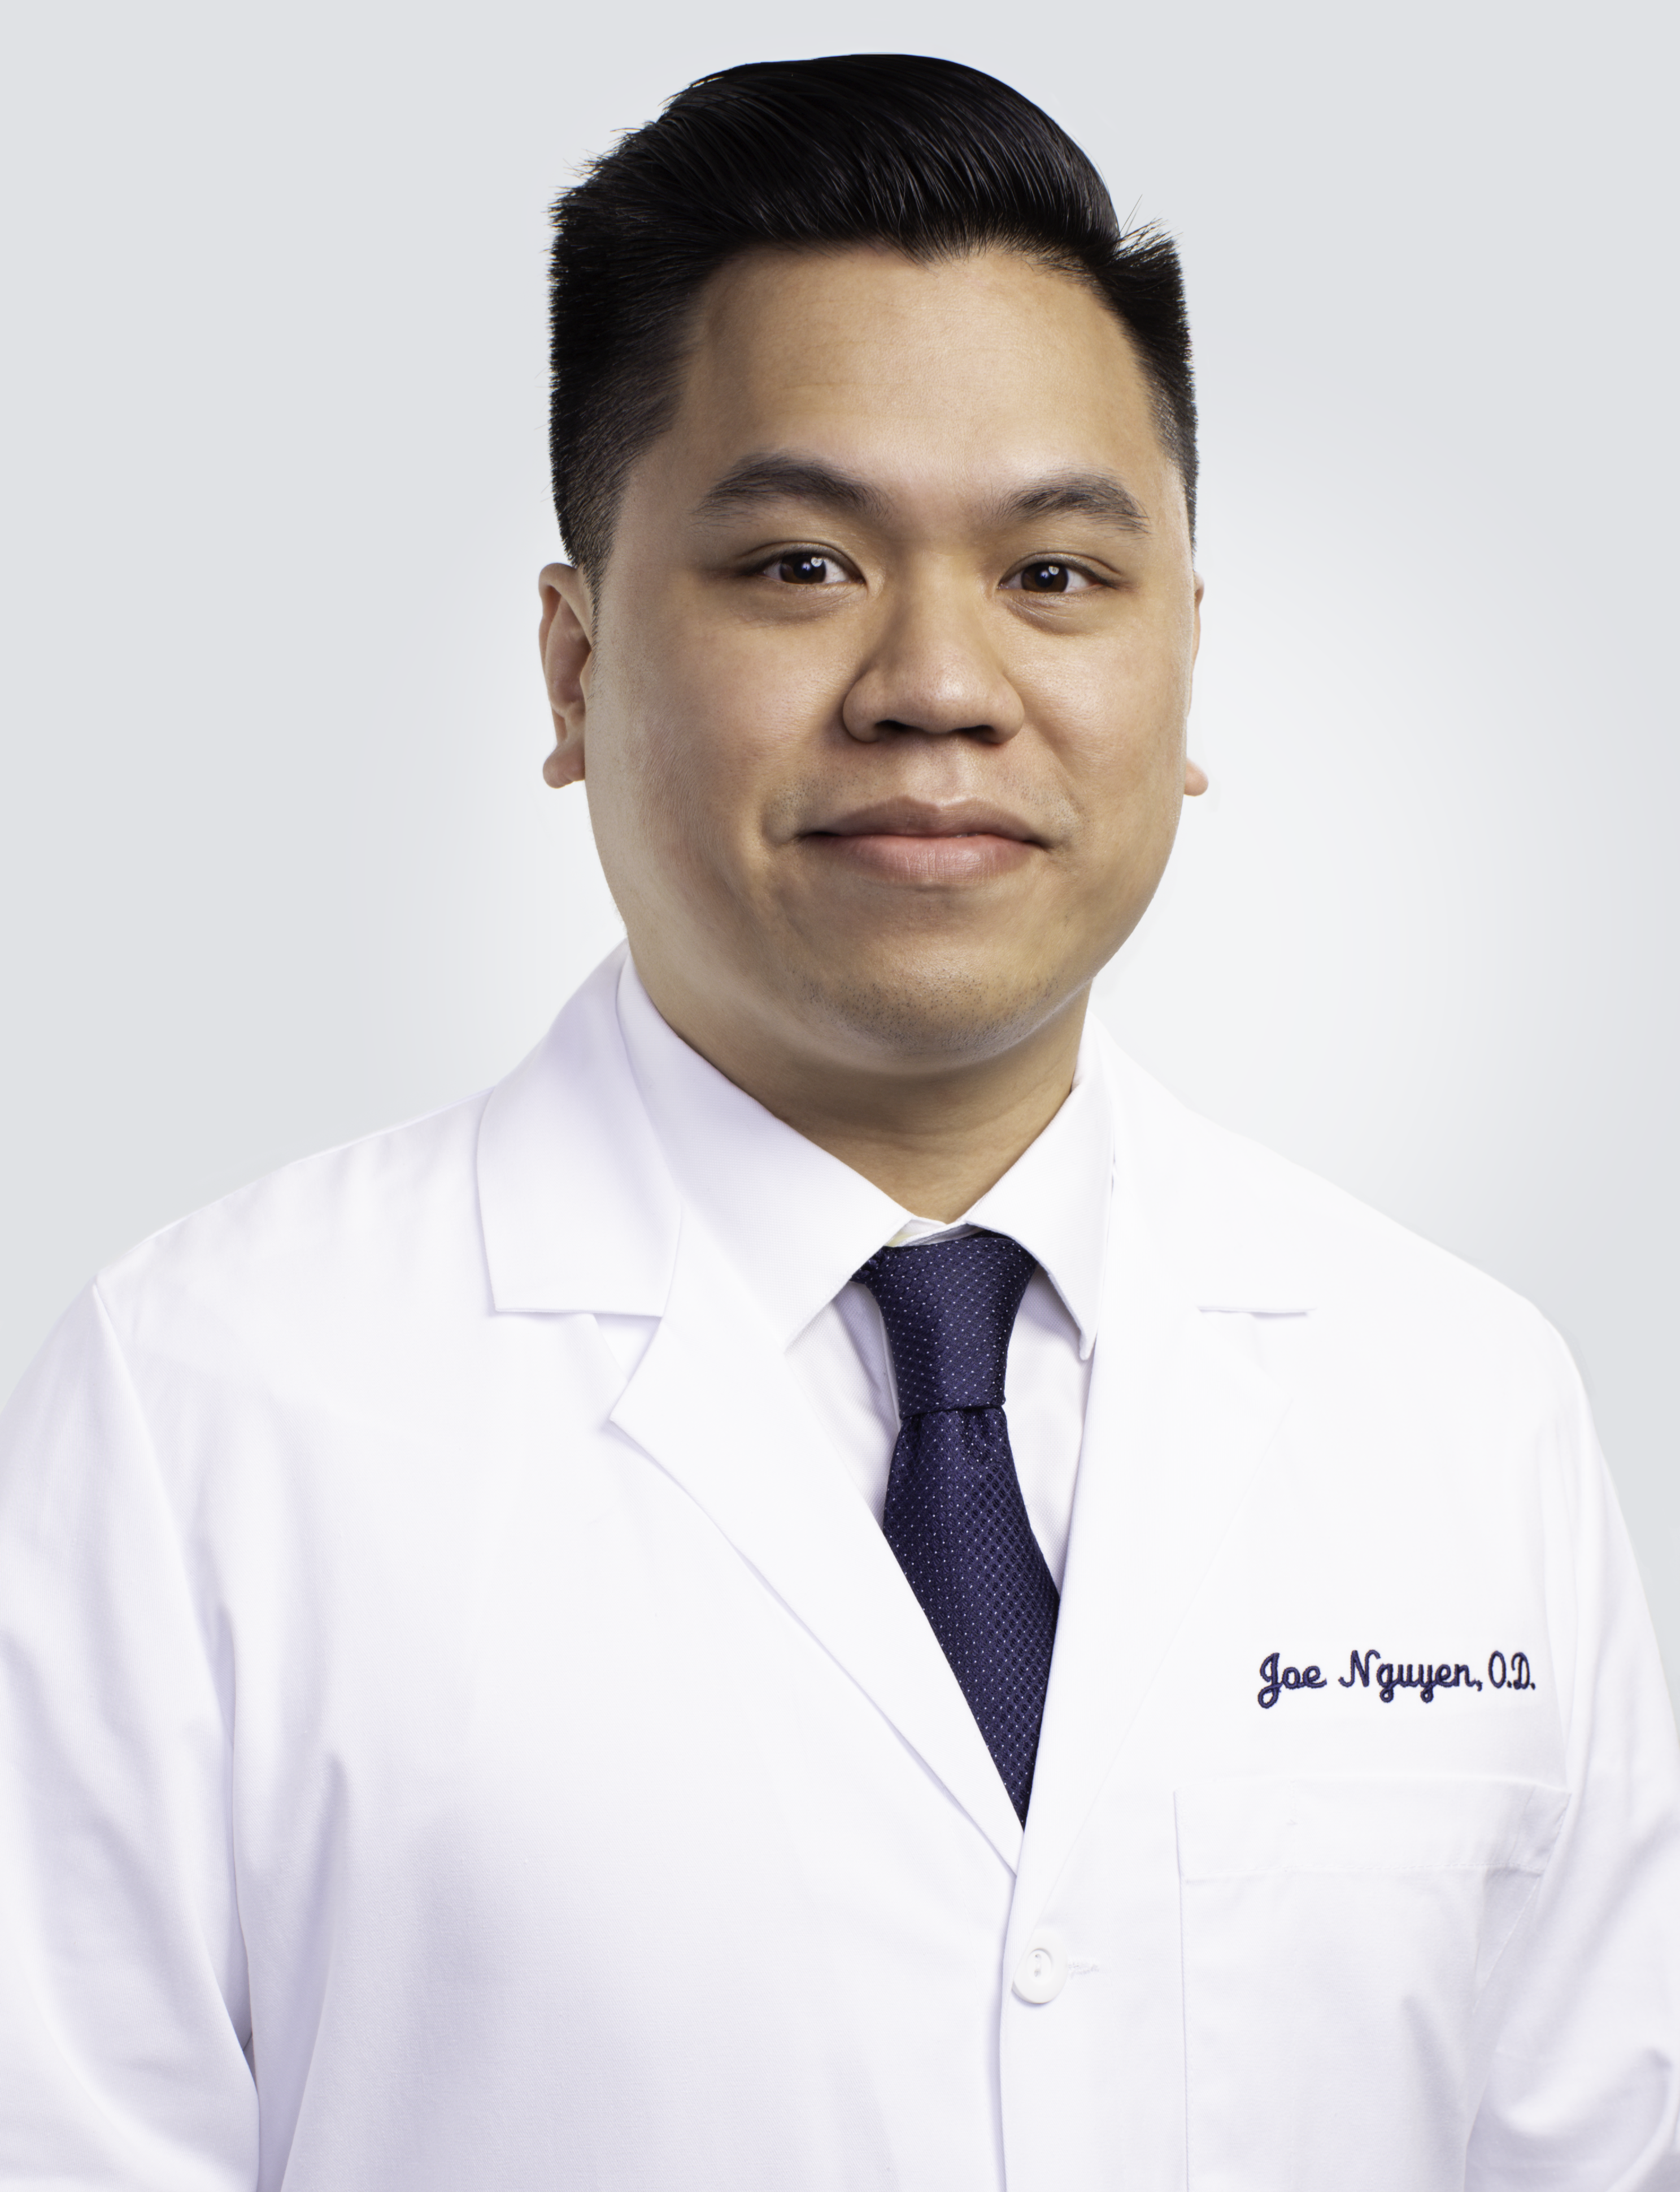 Dr Joe Nguyen OD